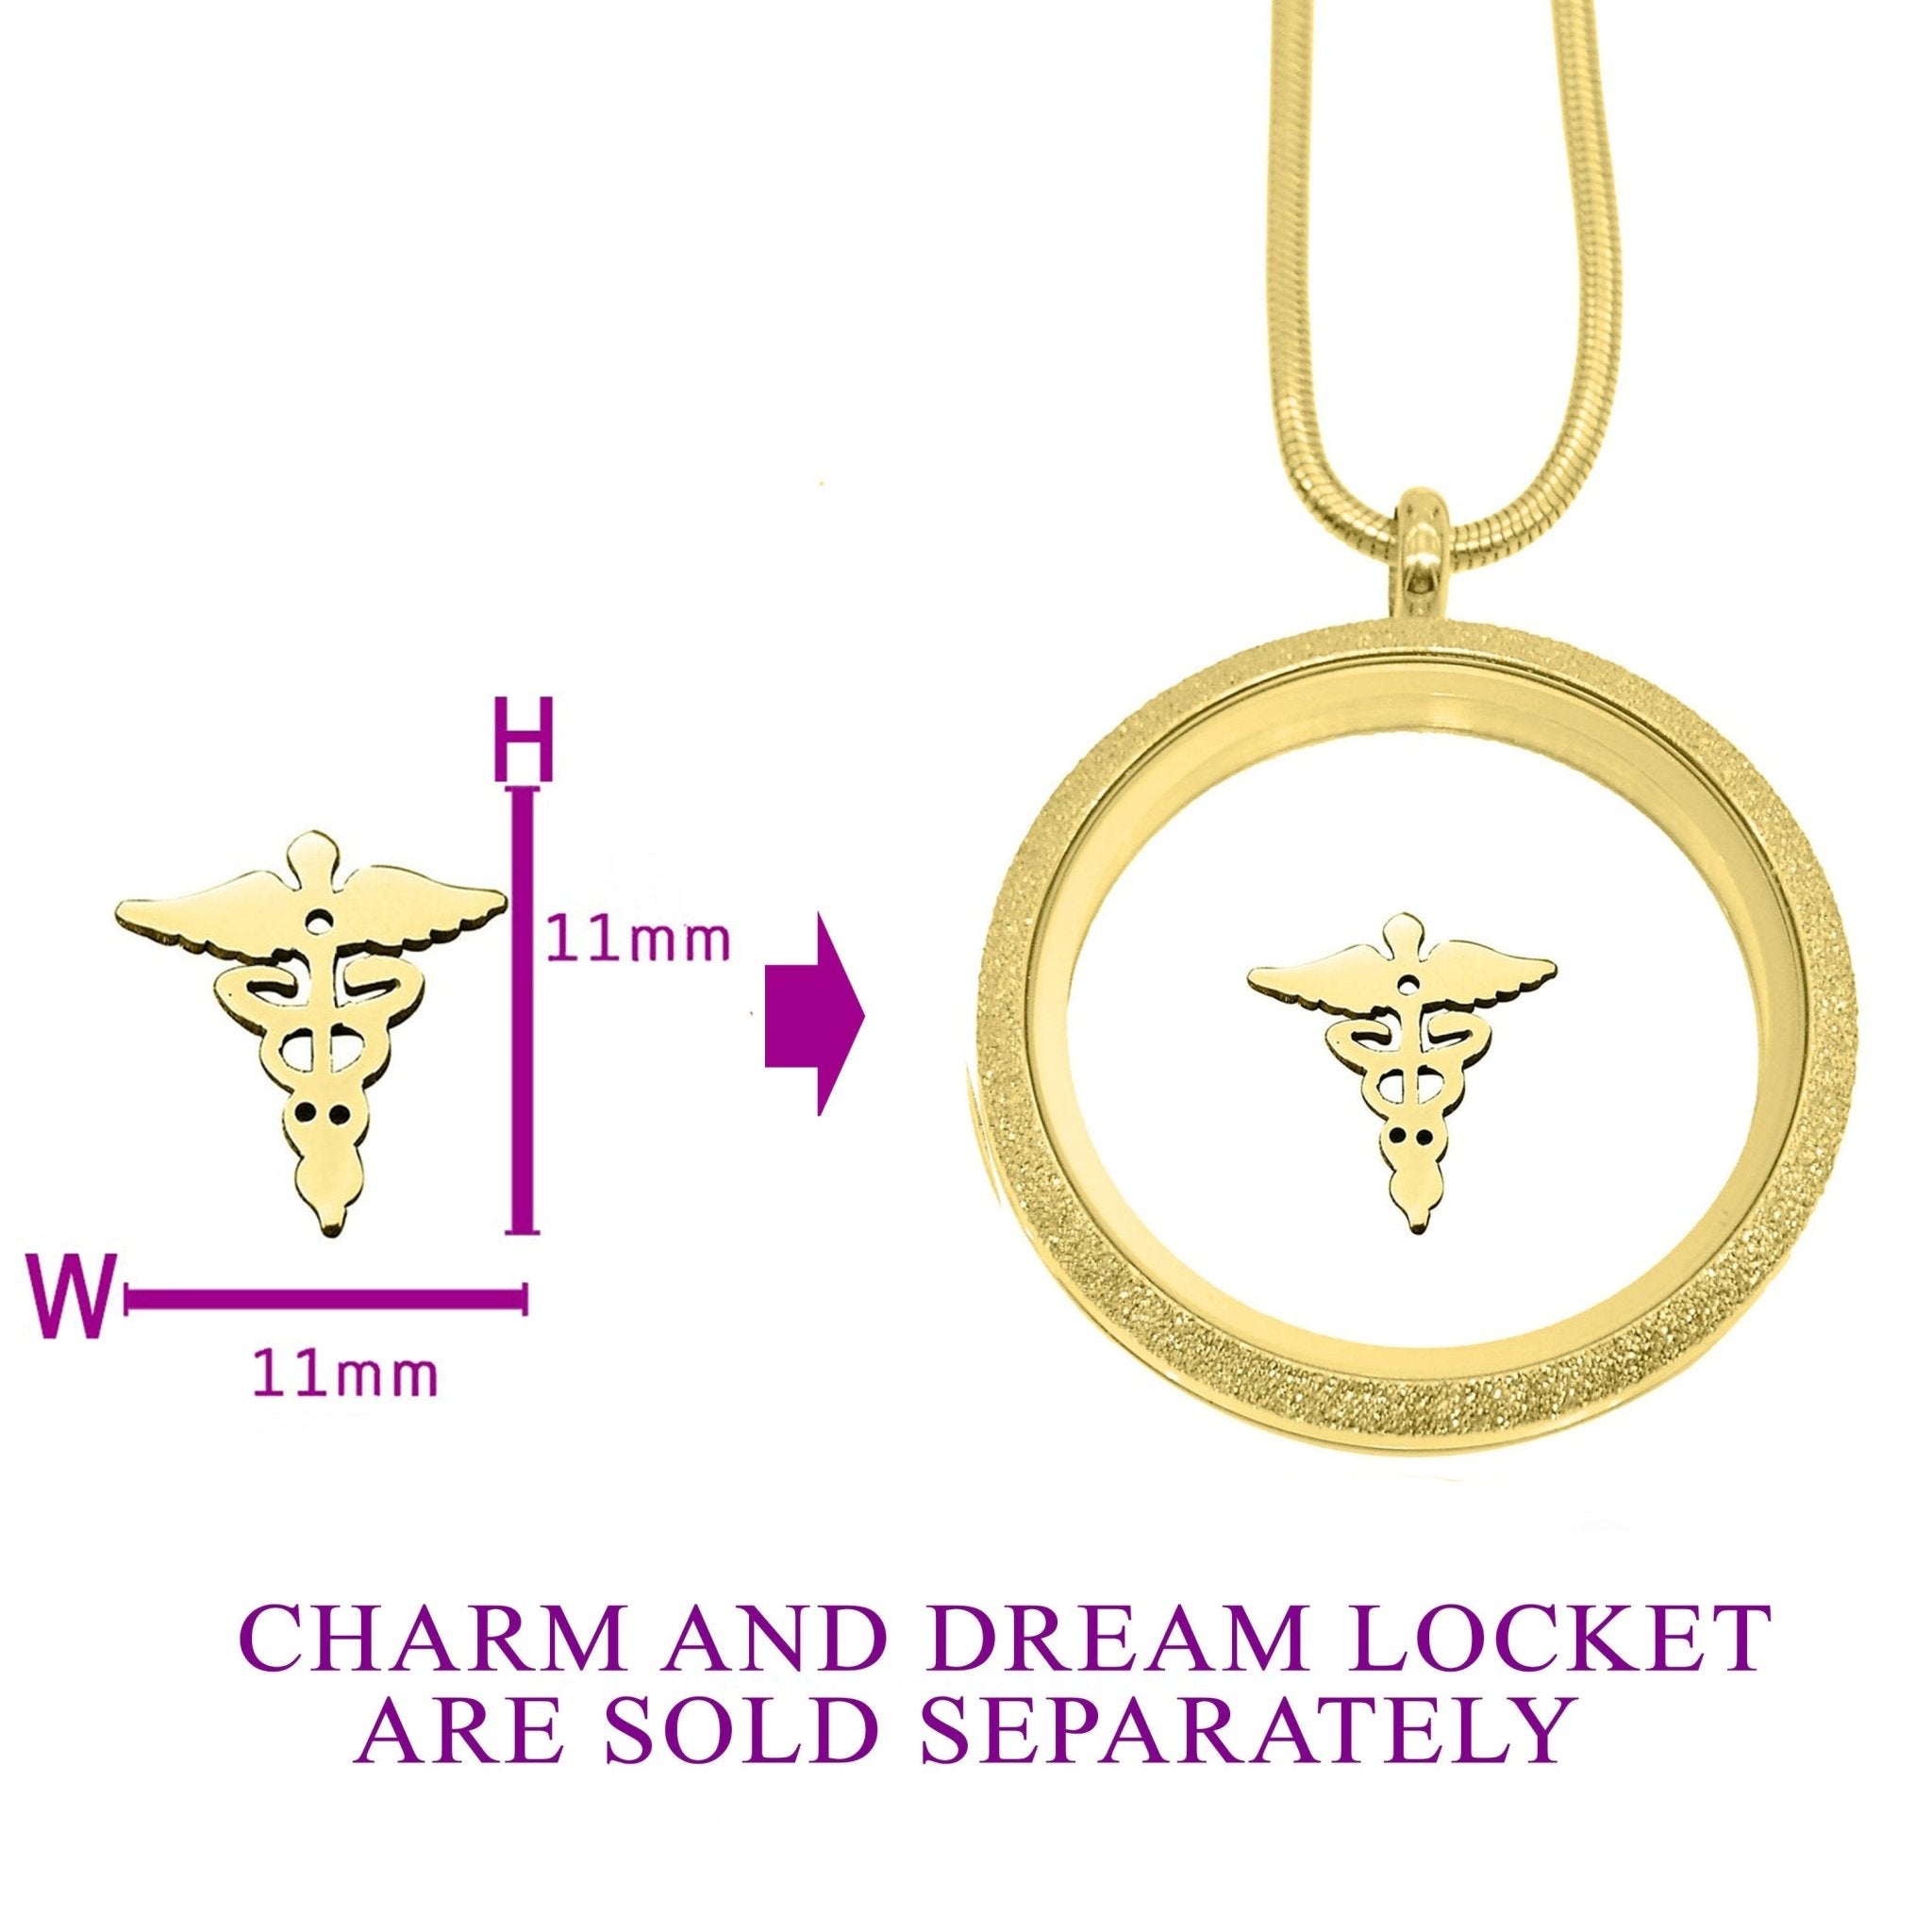 Medical Charm for Dream Locket - Floating Dream Lockets by Belle Fever